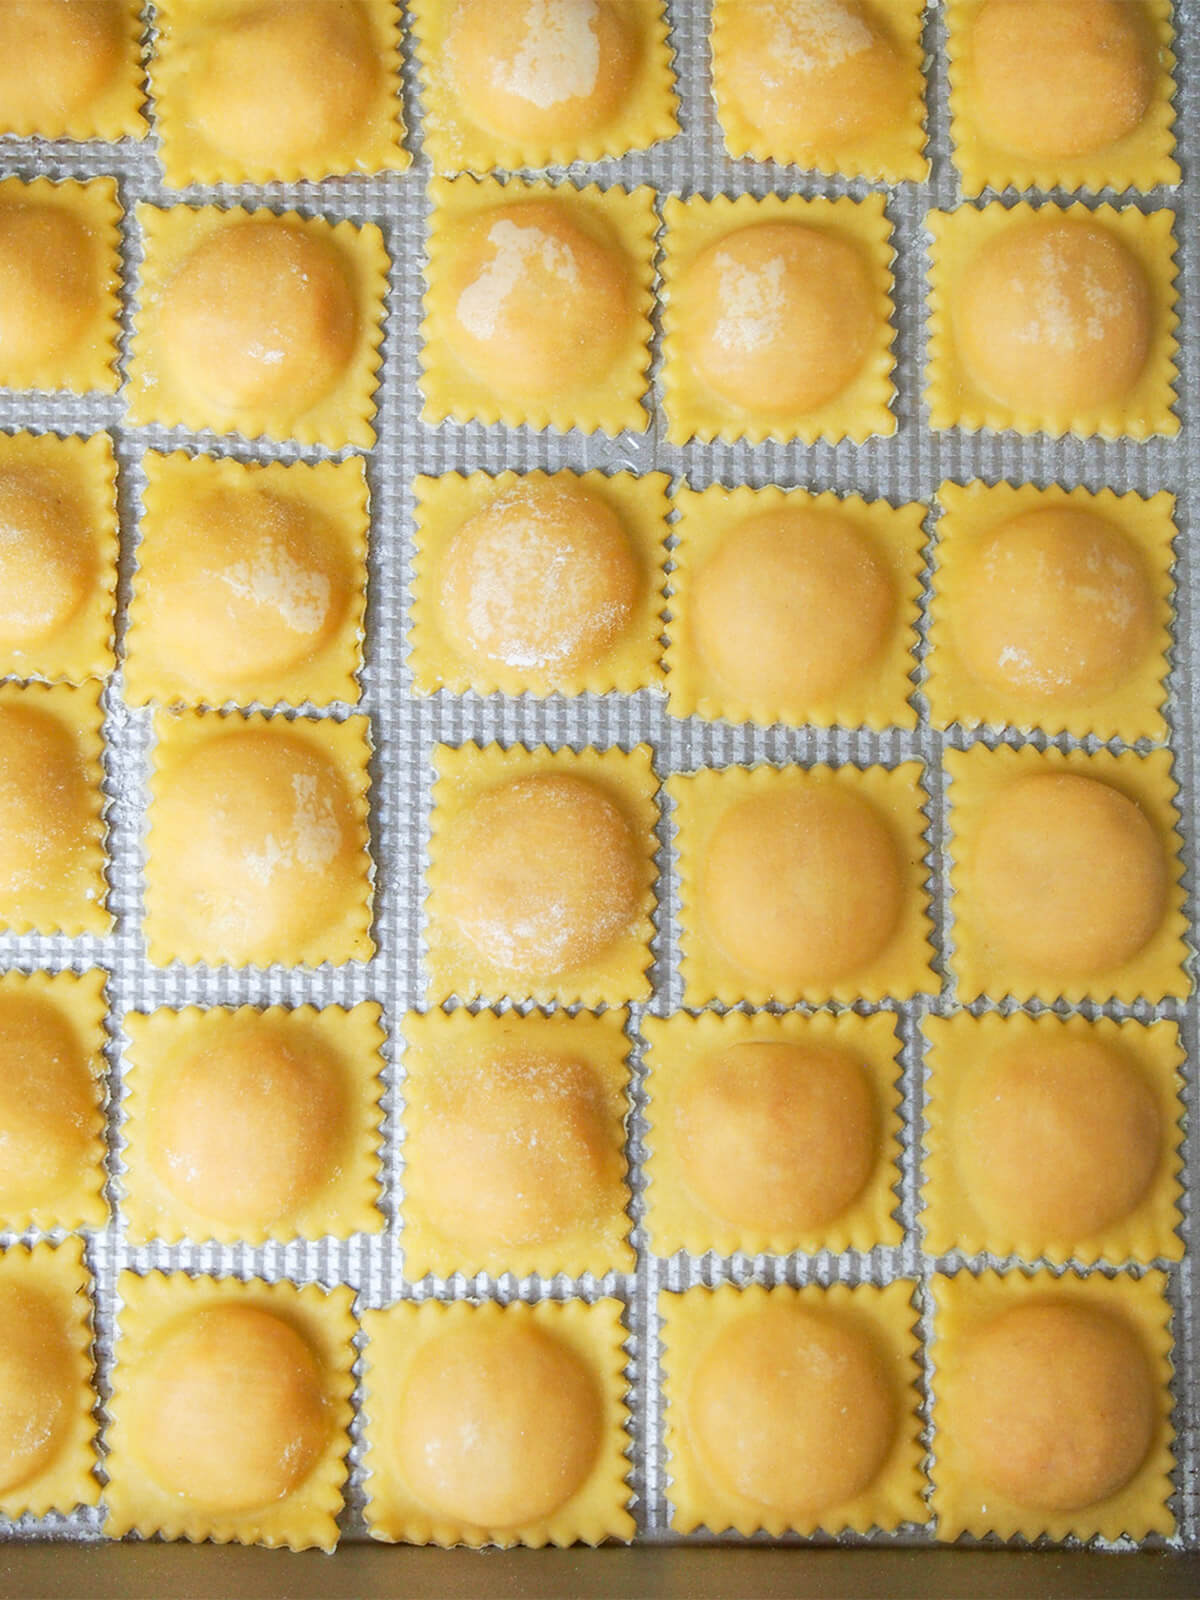 rows of ravioli on baking sheet before cooking